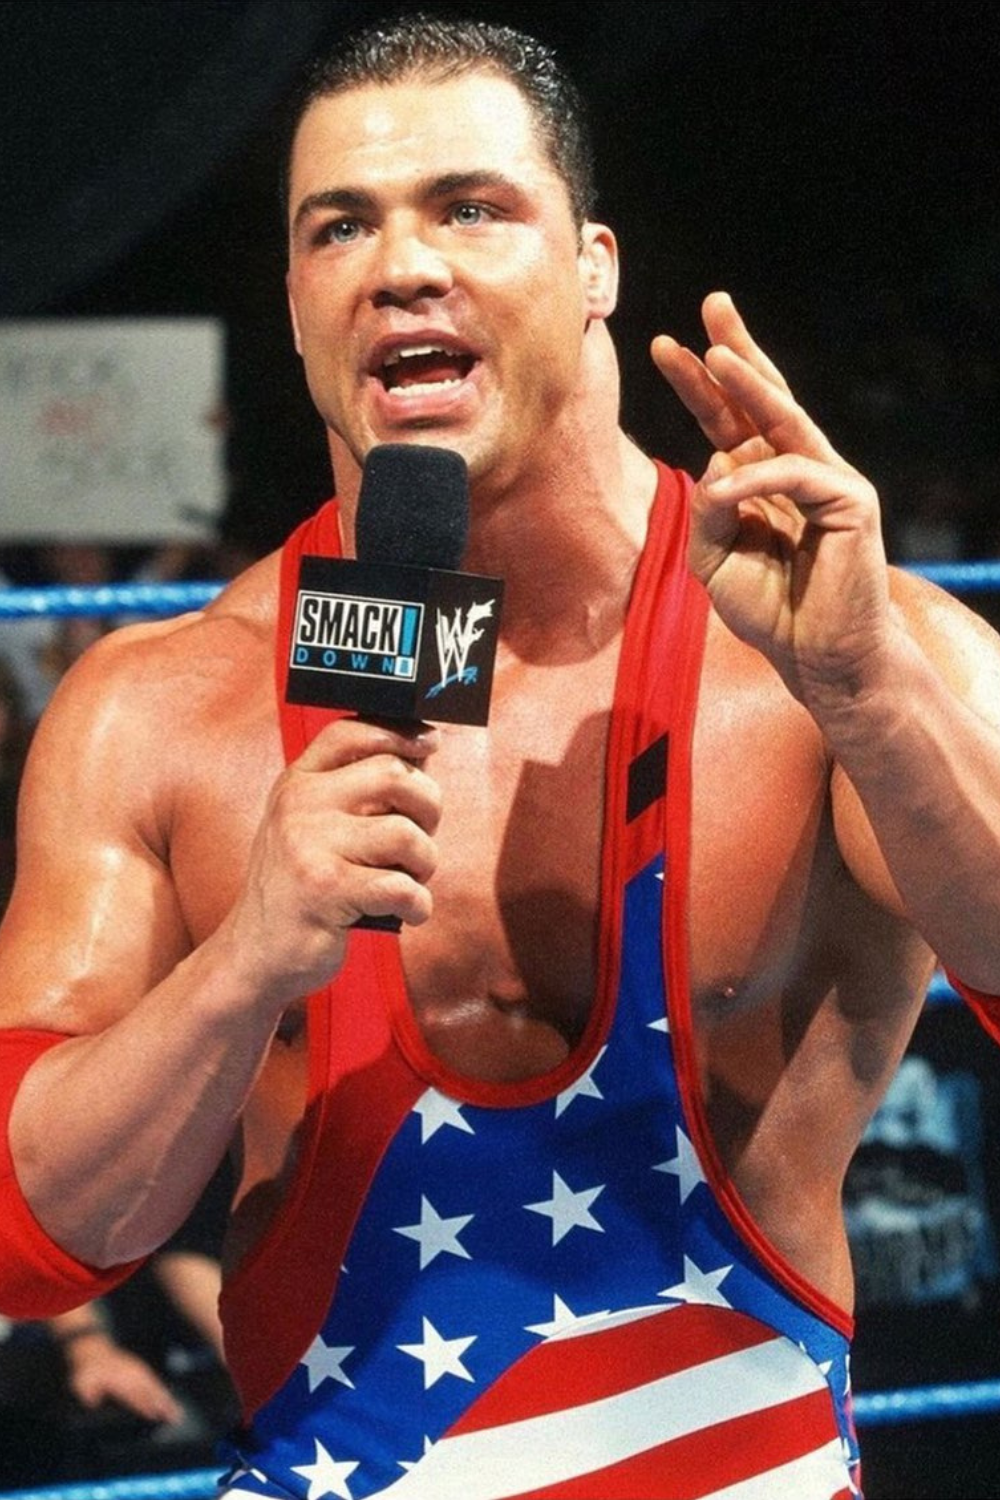 Kurt Steven Angle, A Former Professional Wrestler